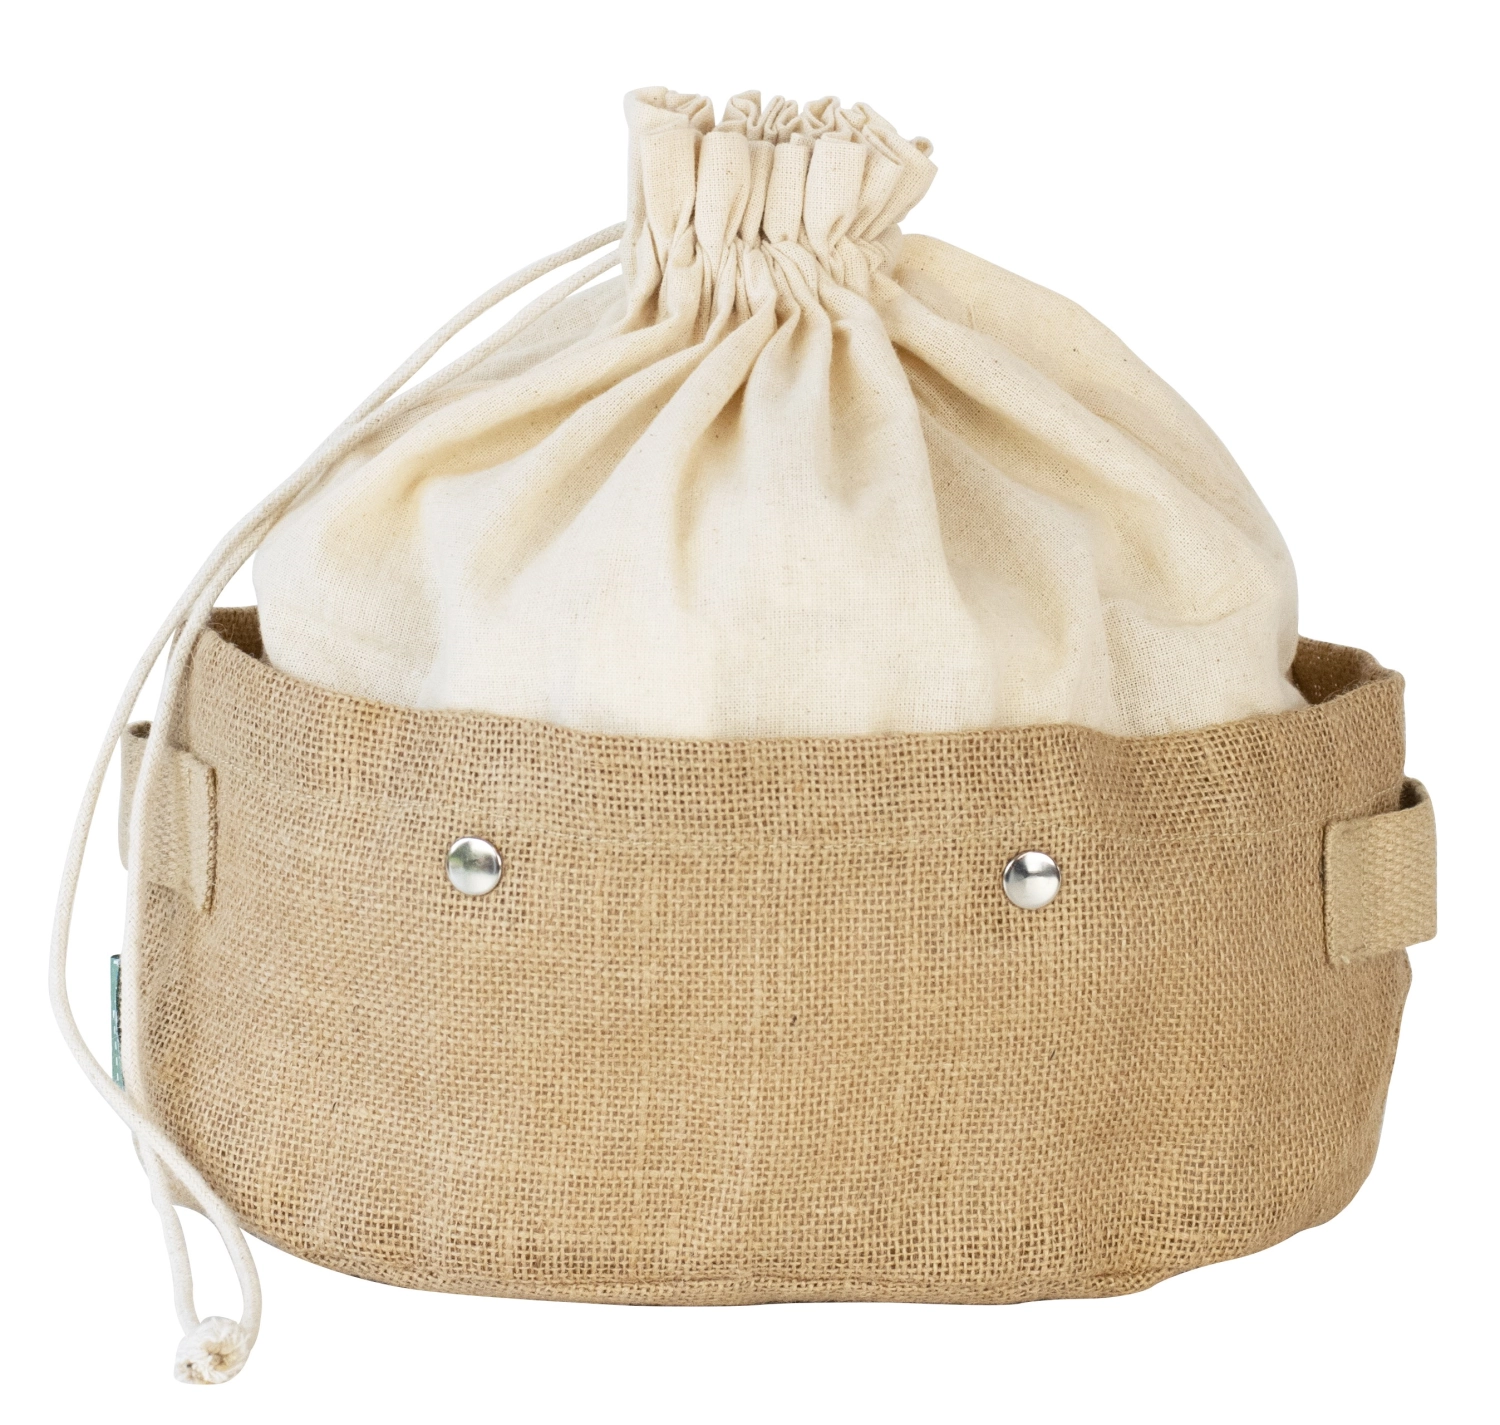 Pebbly sac de rangement avec sac amovible, natural s